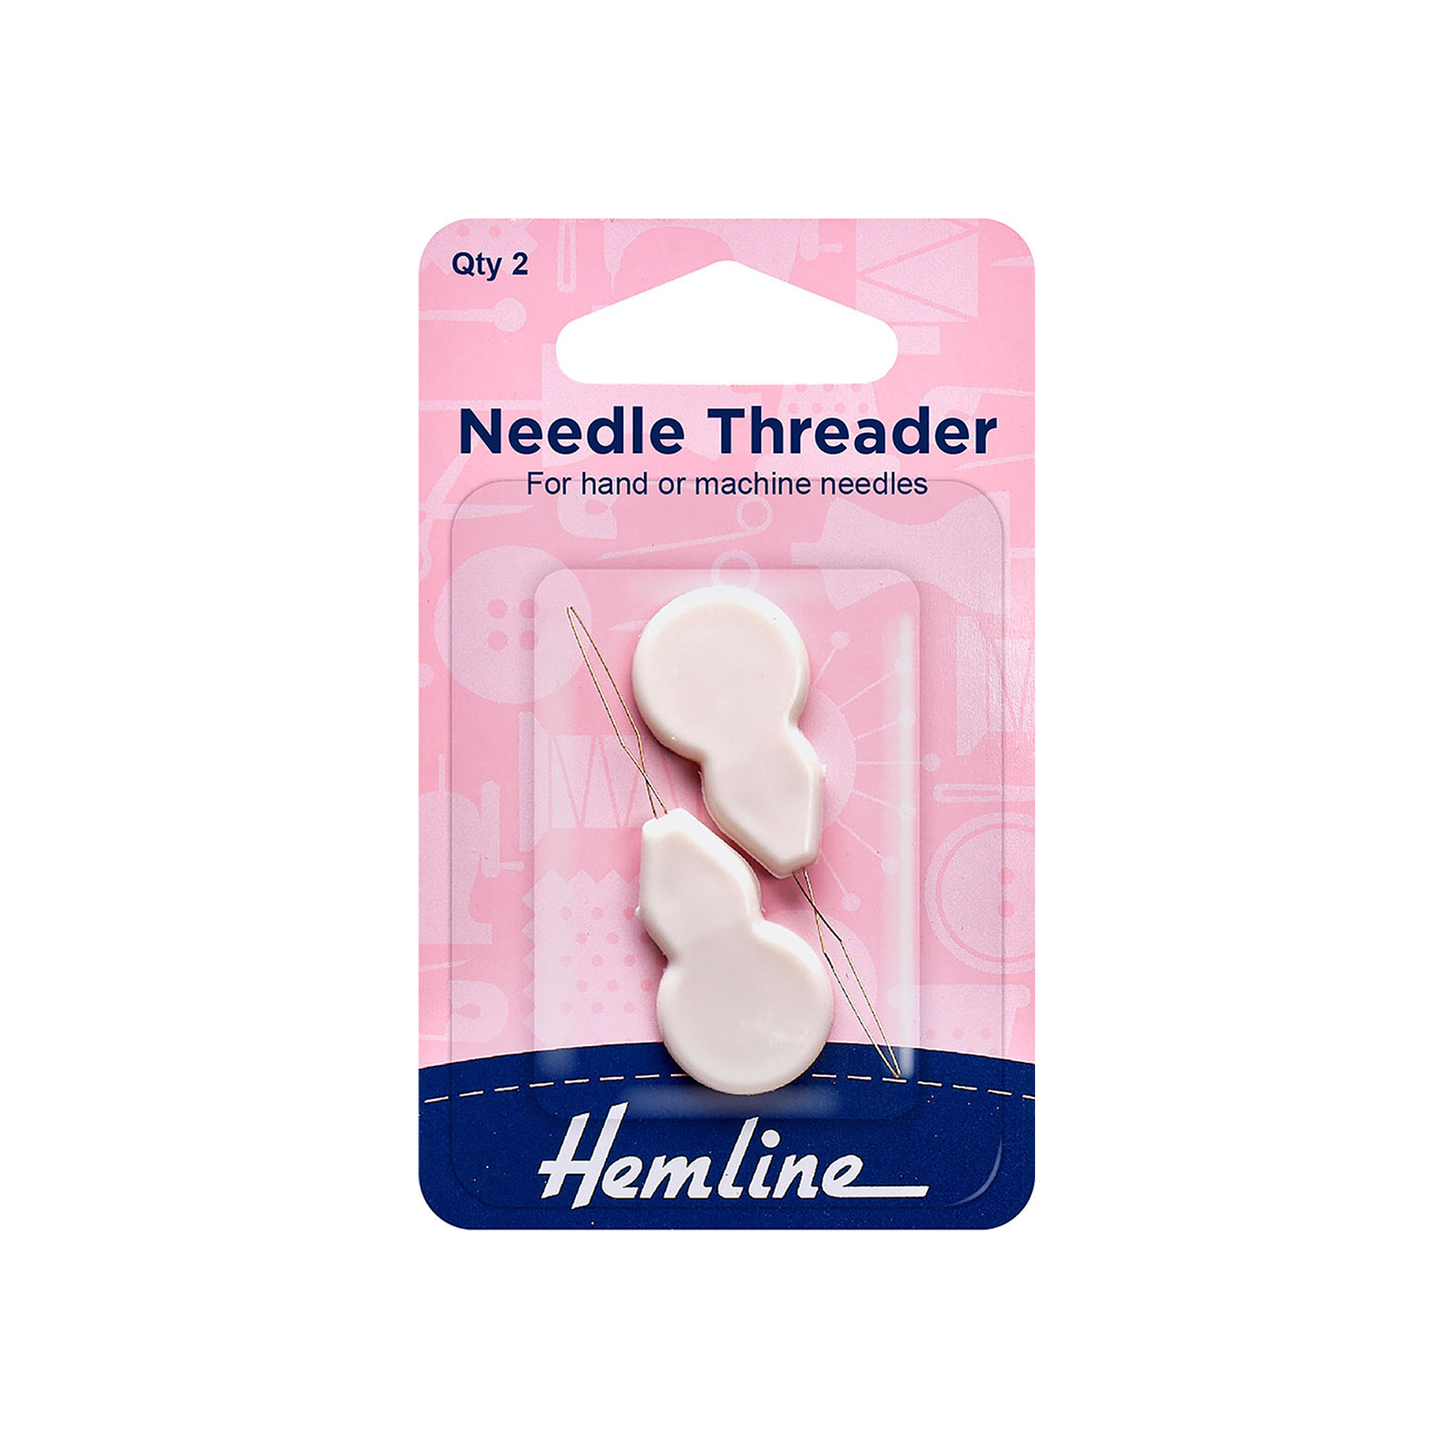 Hemline Needle Threaders